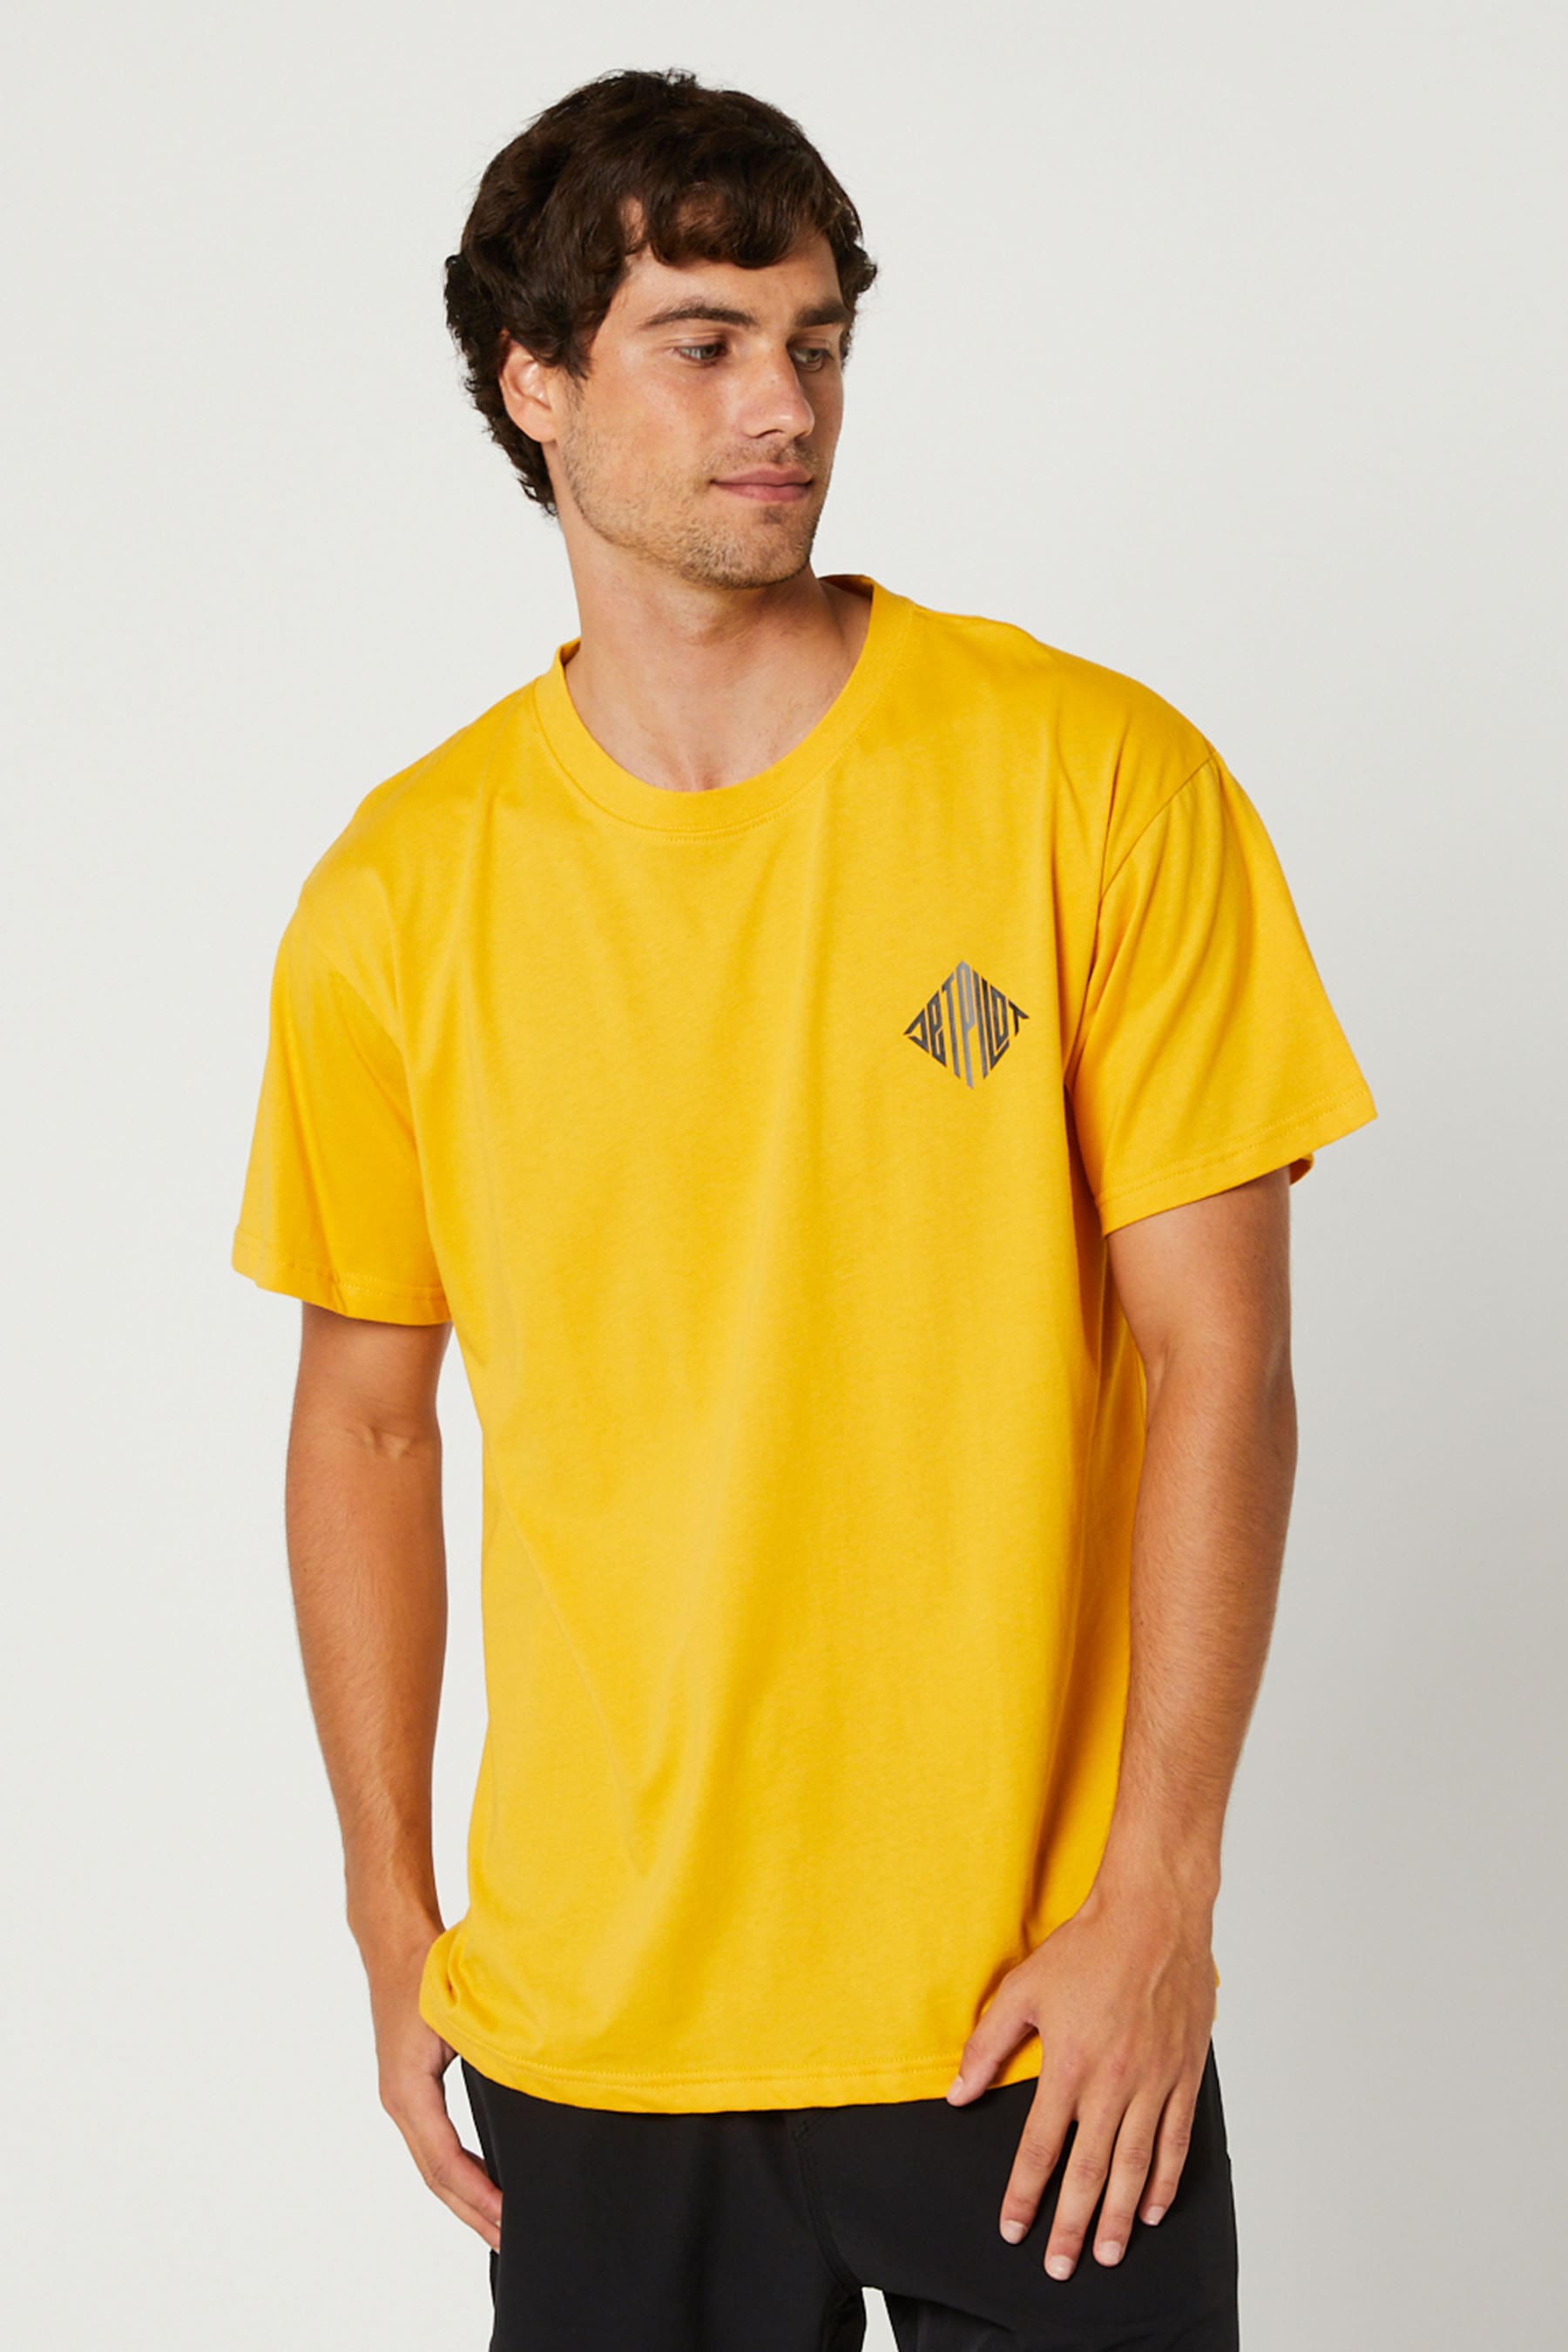 Imprint Mens SS T-Shirt Yellow